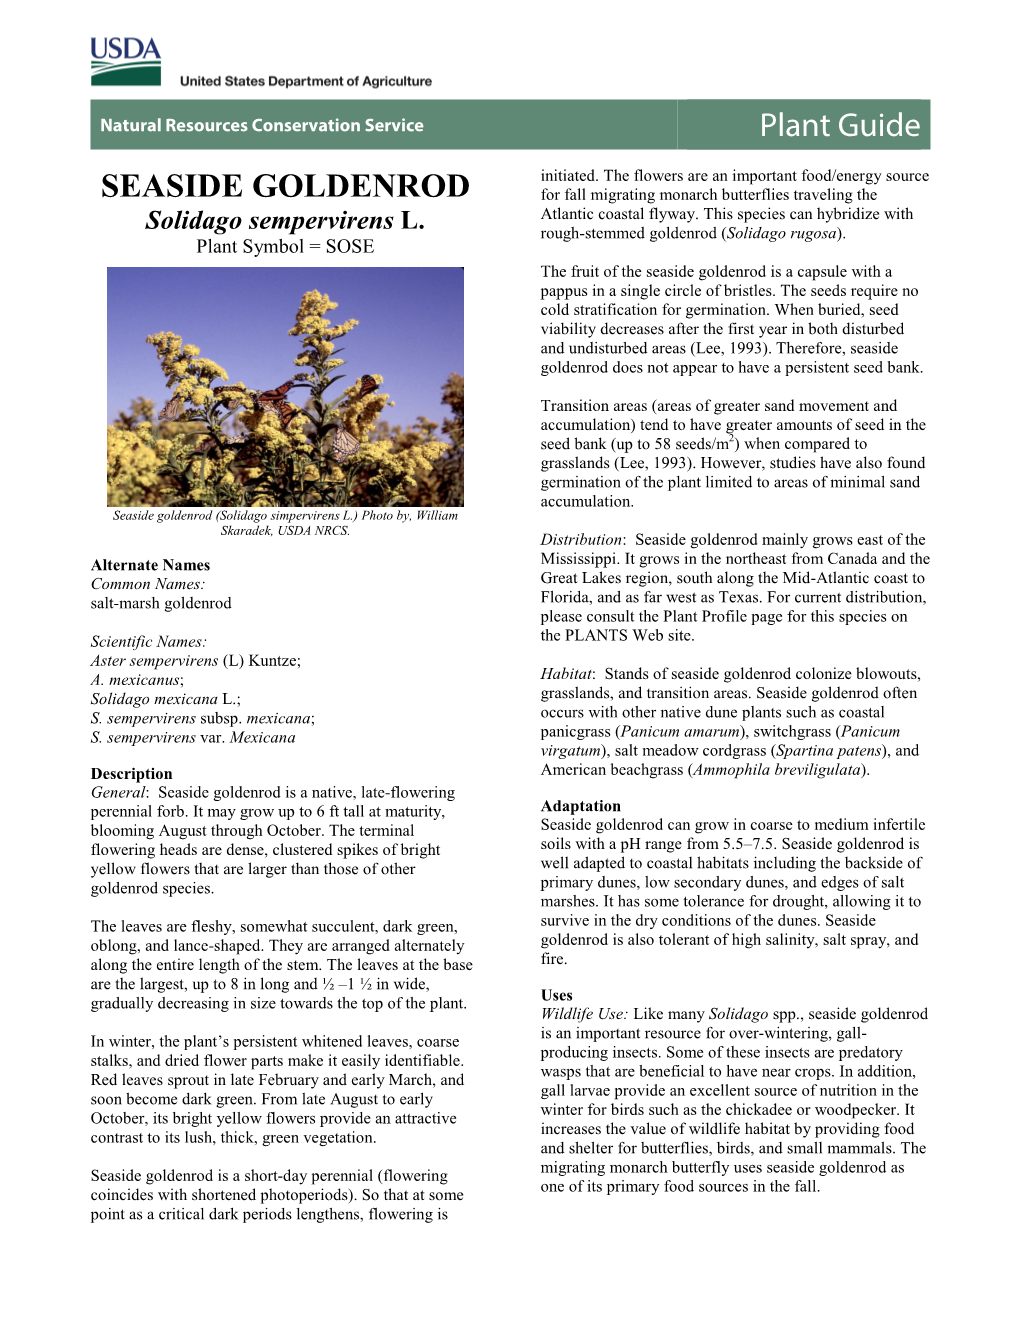 (Solidago Sempervirens) Plant Guide